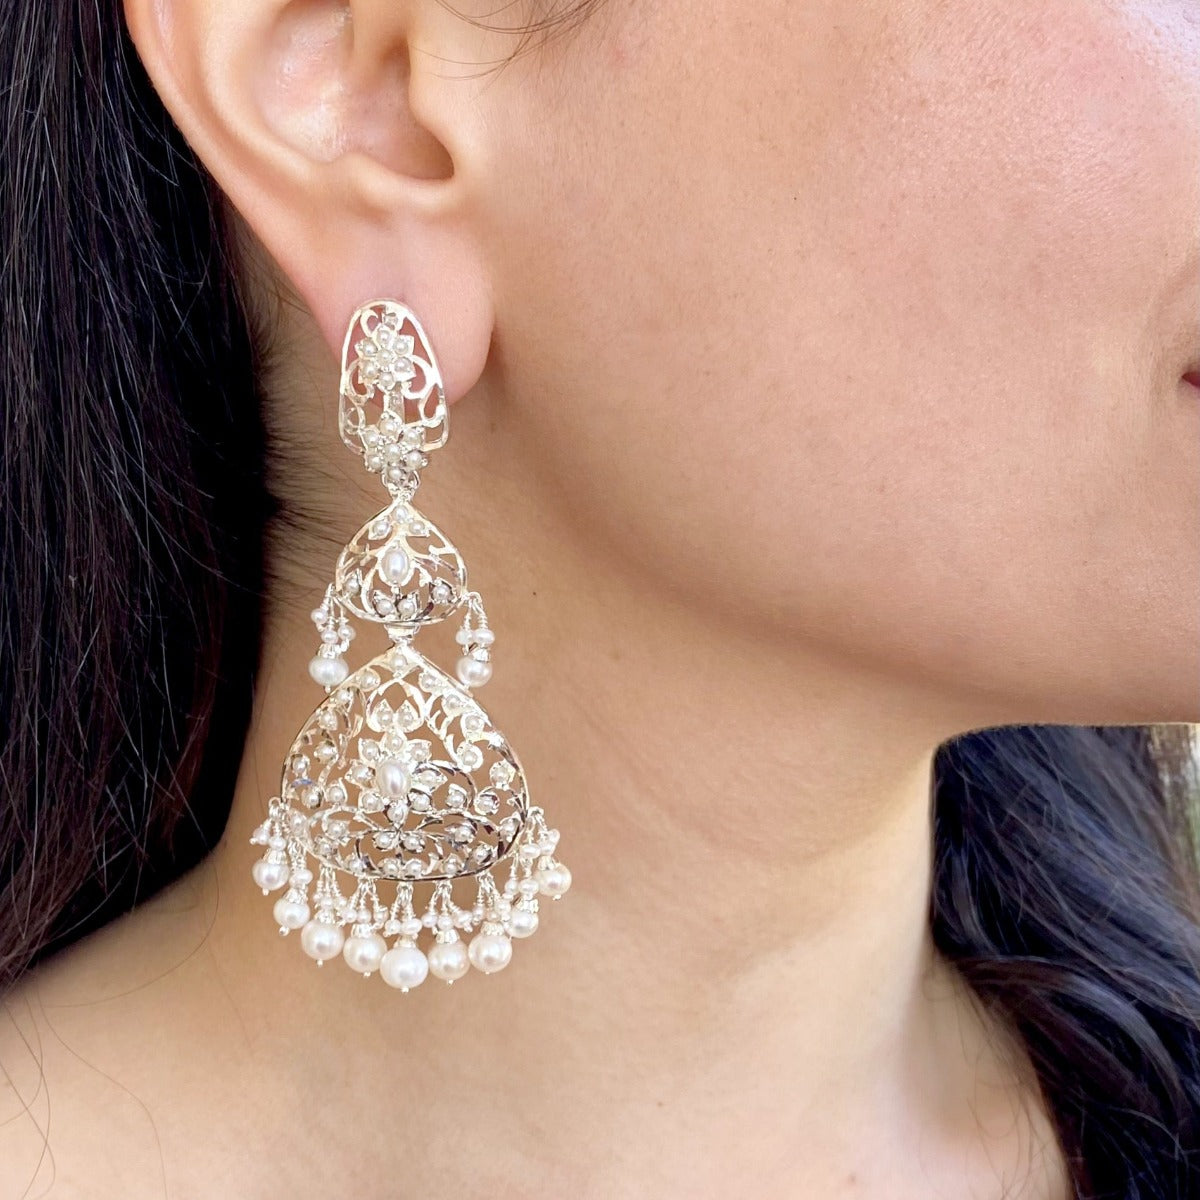 buy sterling silver earrings online in india